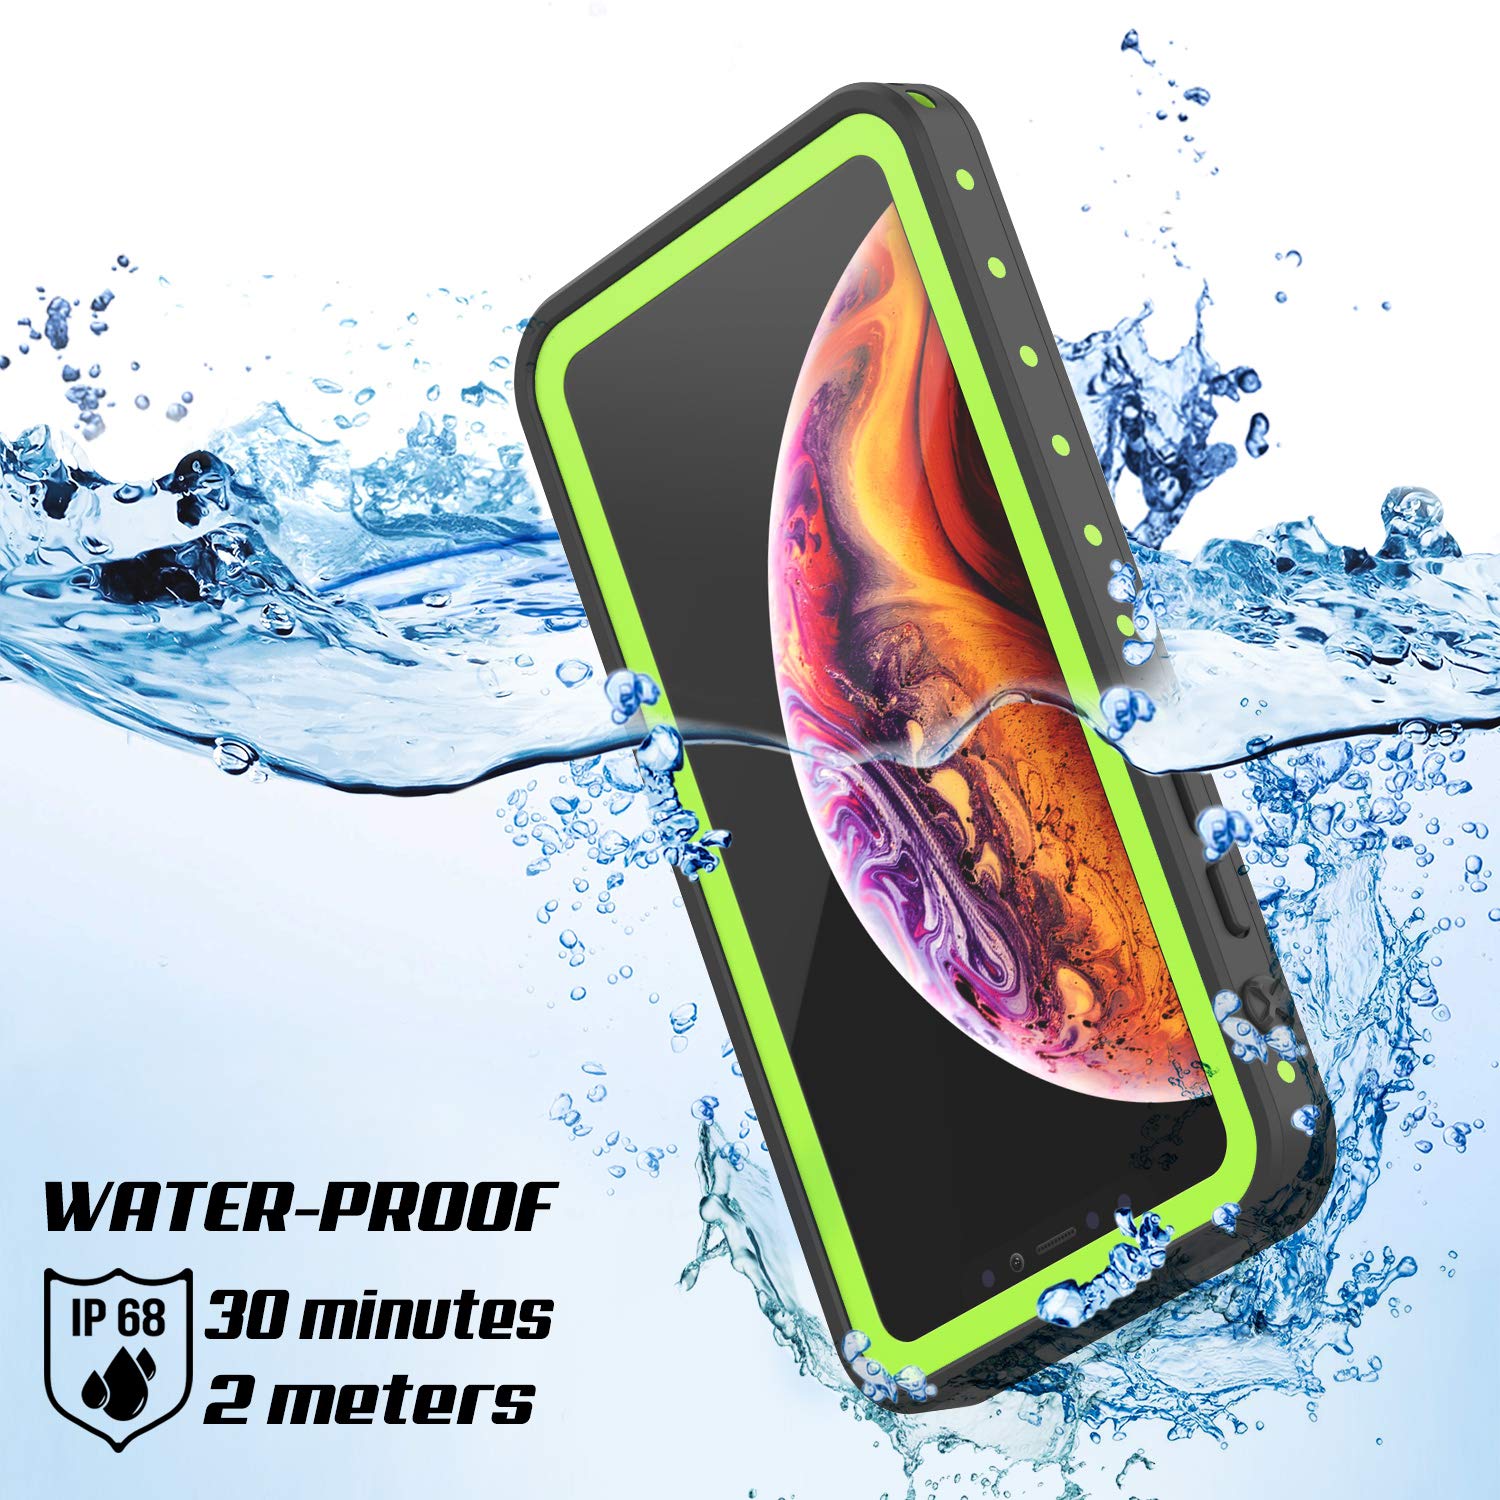 iPhone XS Max Waterproof IP68 Case, Punkcase [Light green] [StudStar Series] [Slim Fit] [Dirtproof]